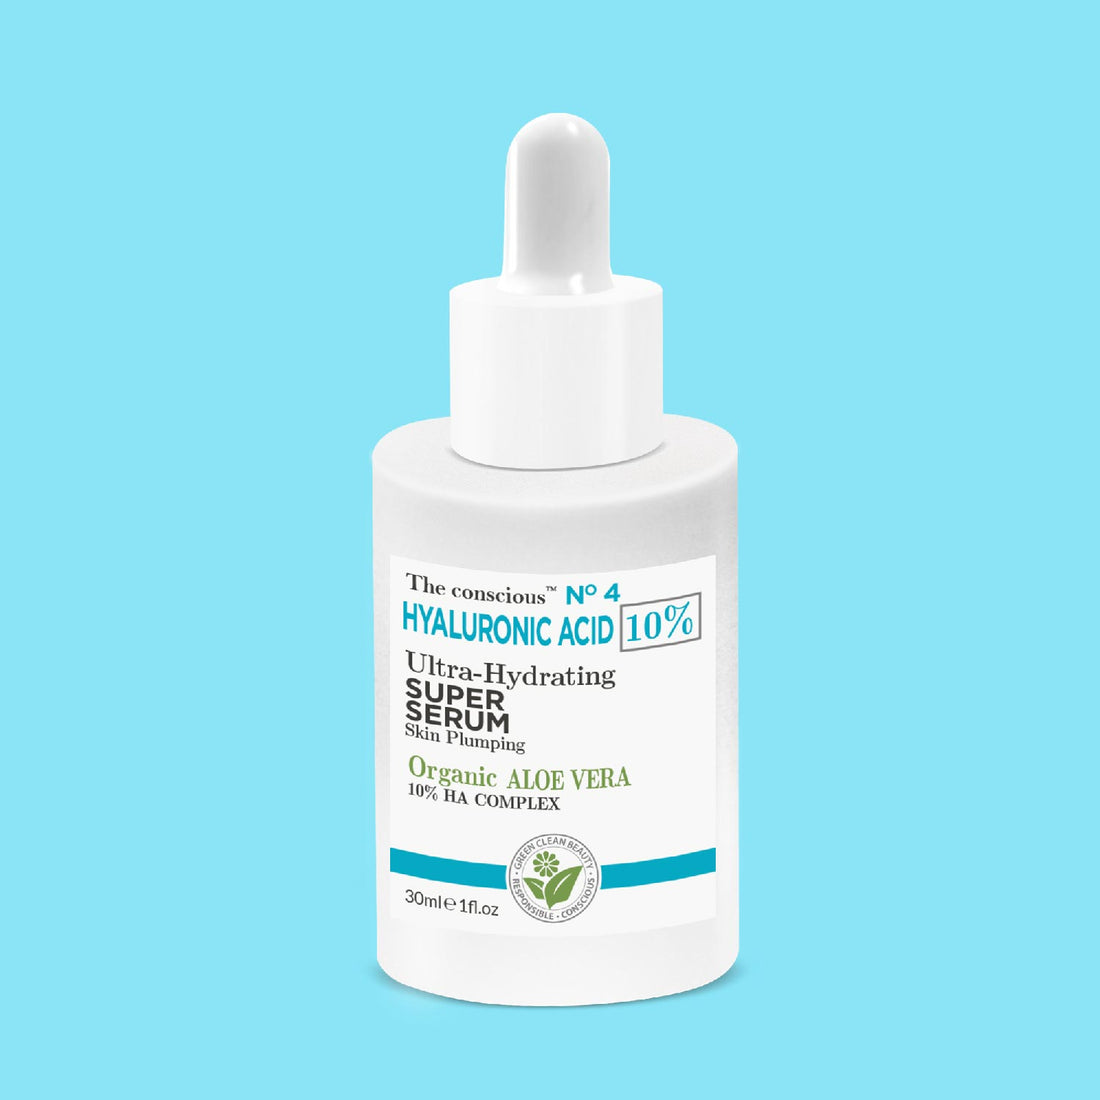 The conscious™ Hyaluronic Acid Ultra-Hydrating Super Serum Organic Aloe Vera